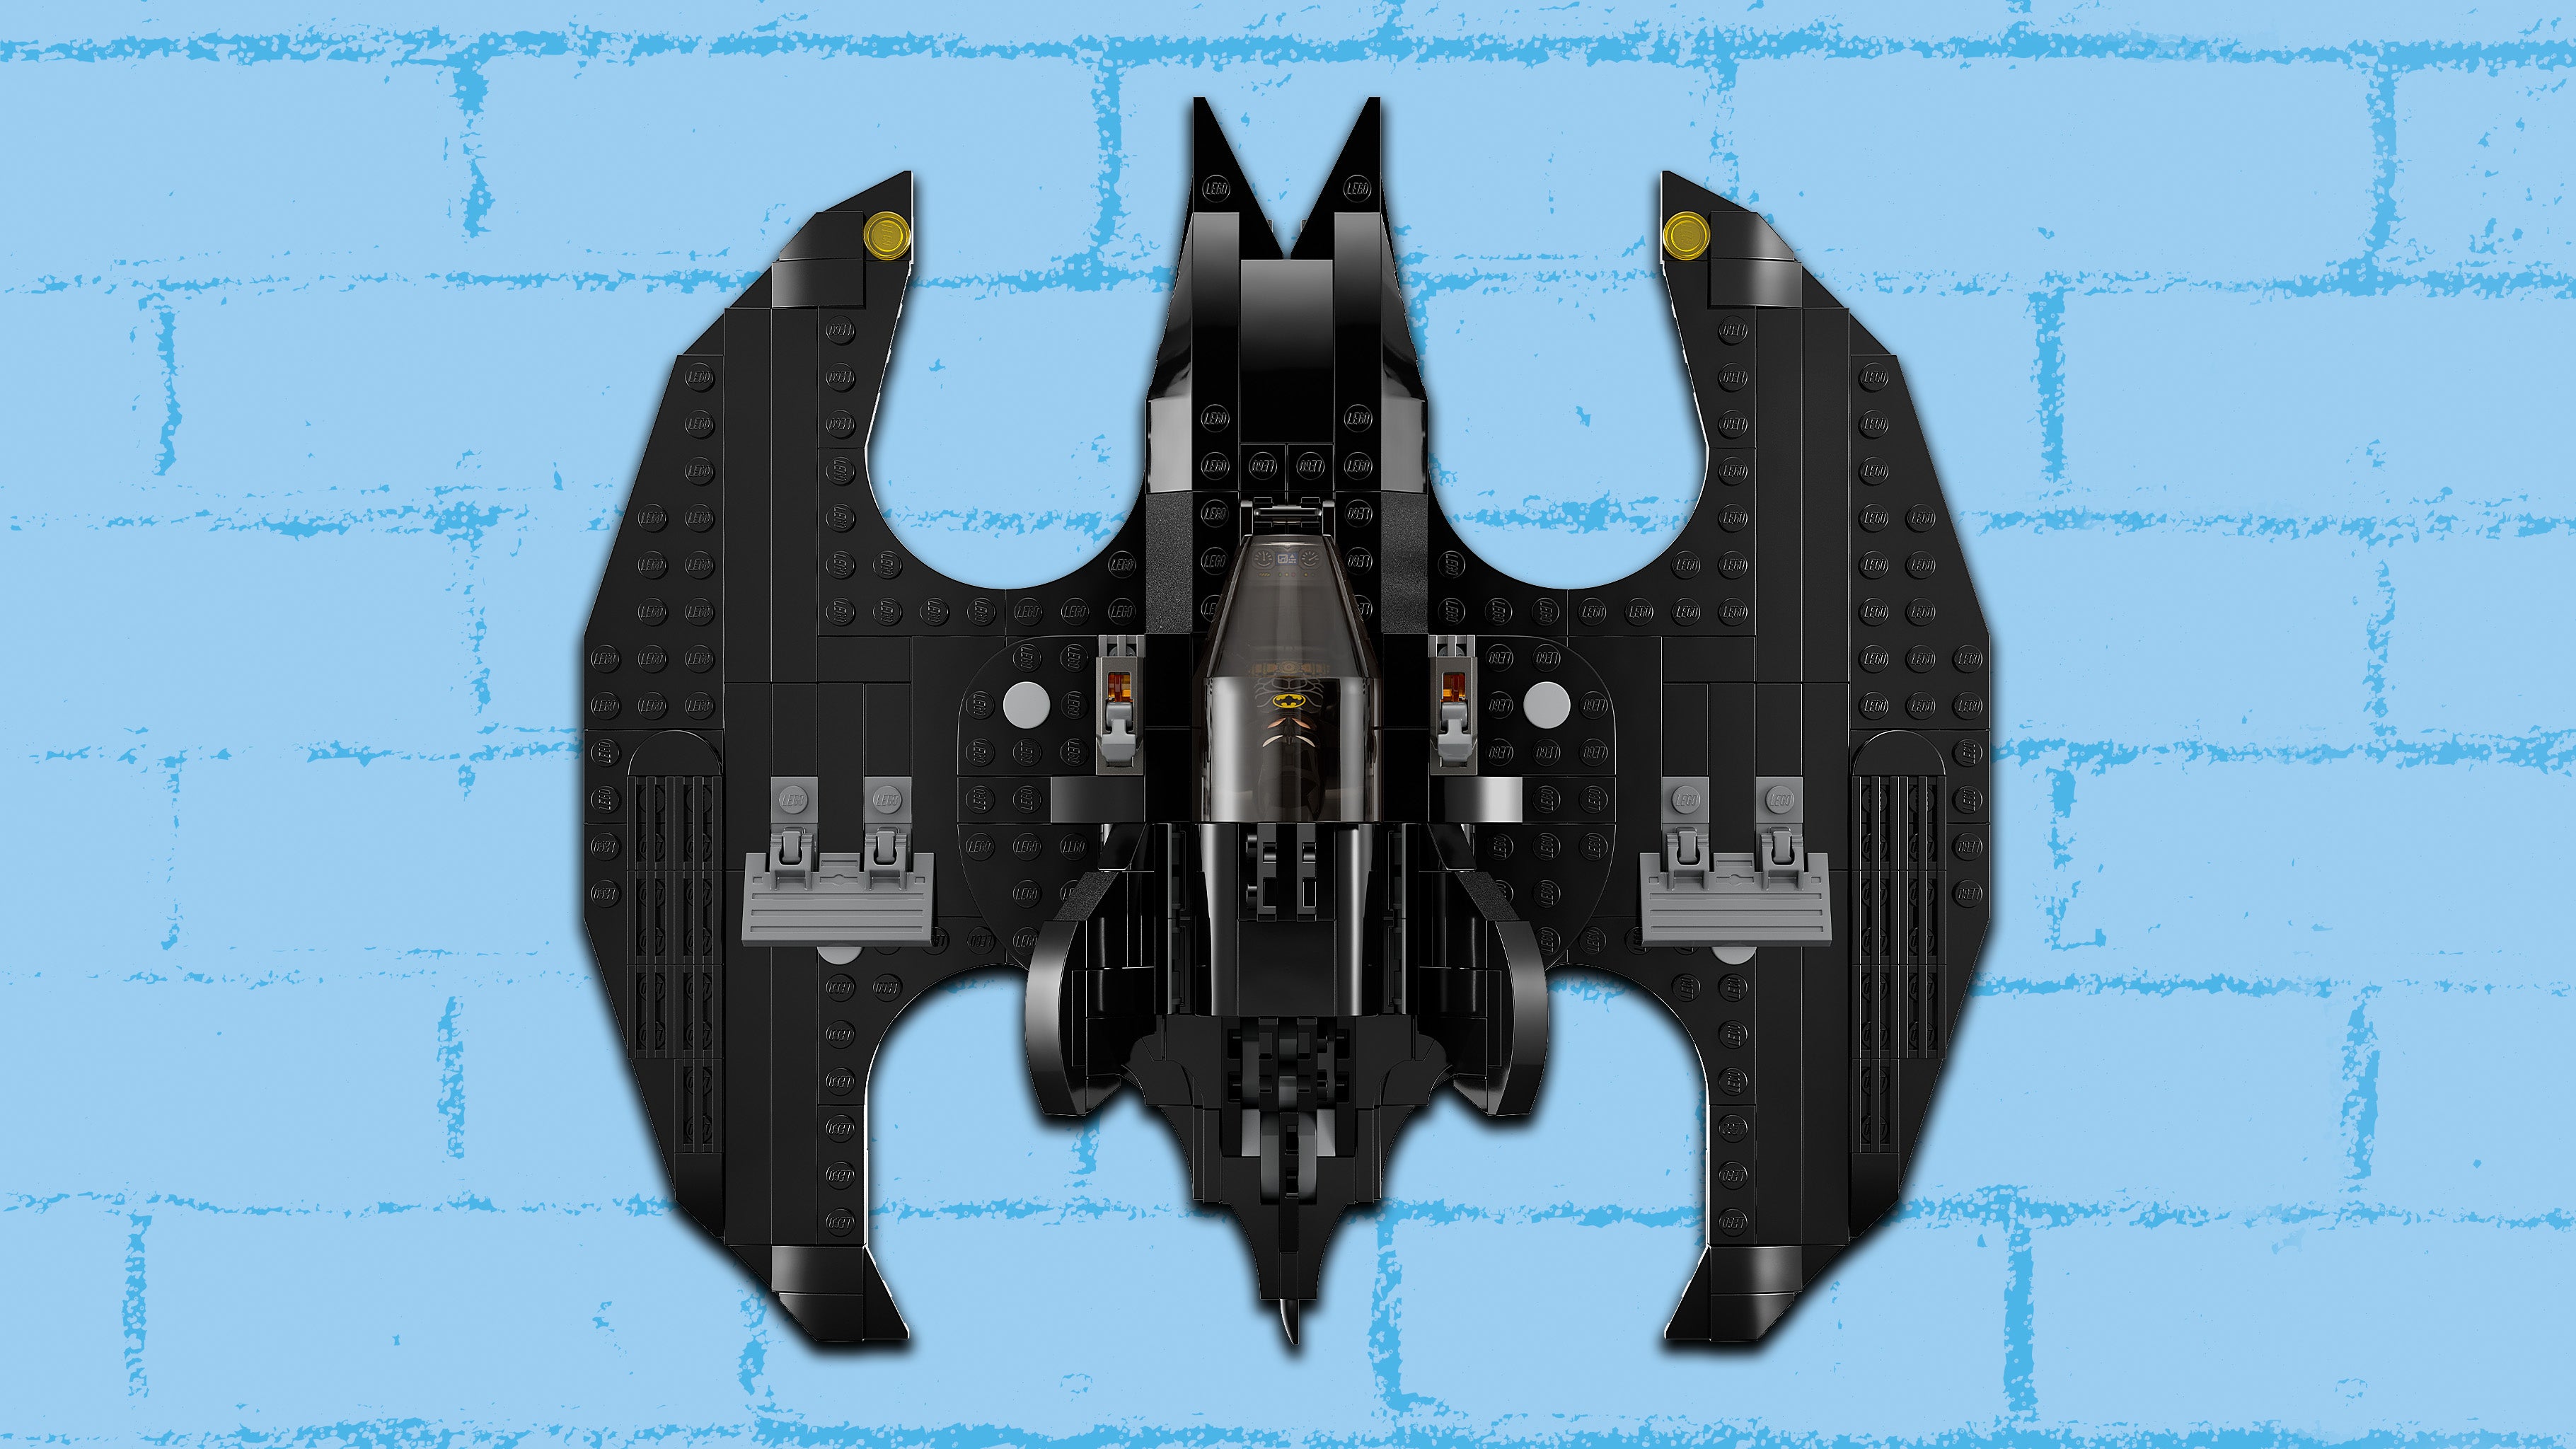 Lego 76265 Batwing Batman vs. The Joker Set